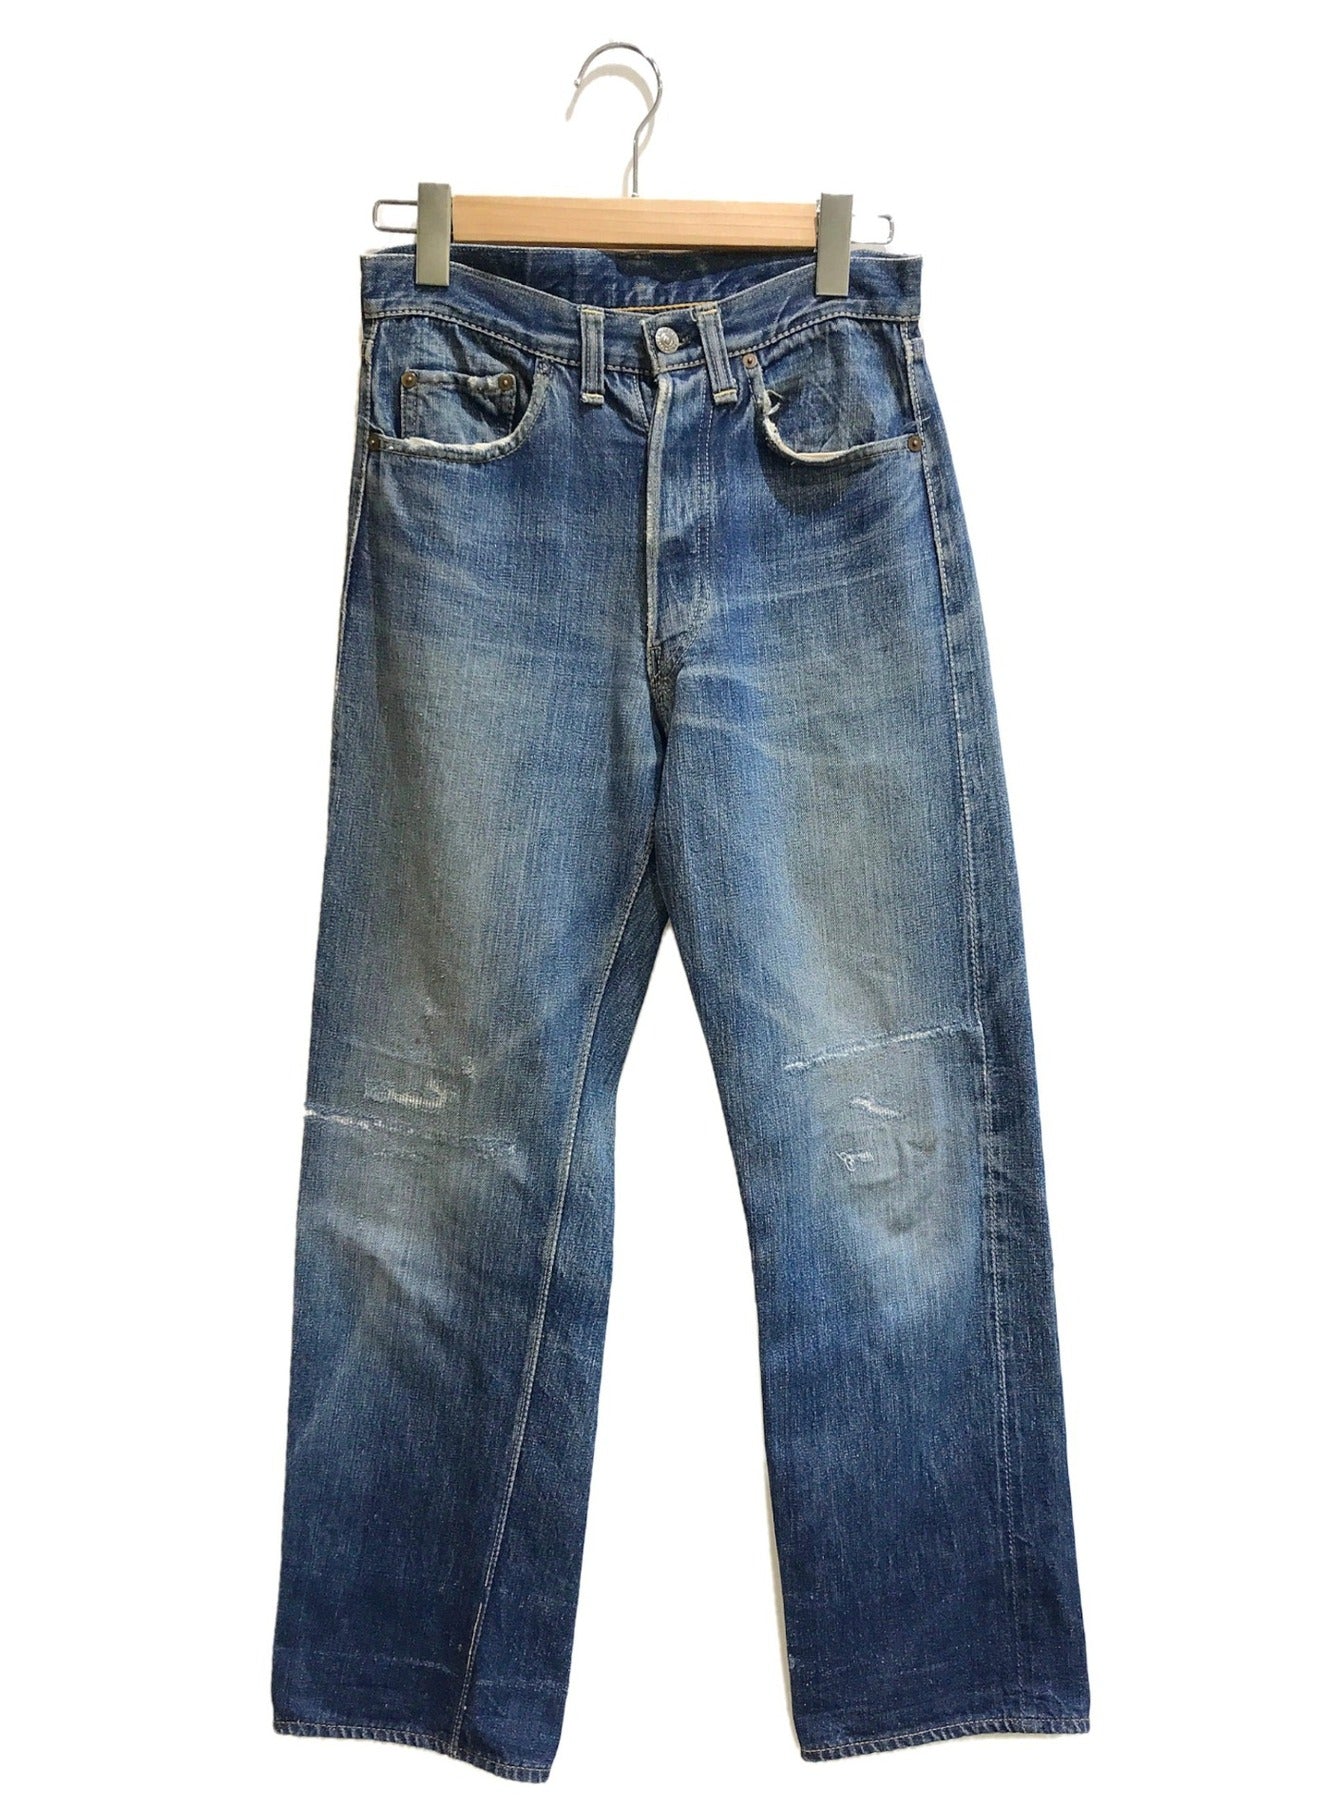 LEVI'S 503B XX Vintage Denim Pants Model 47, leather patch, two